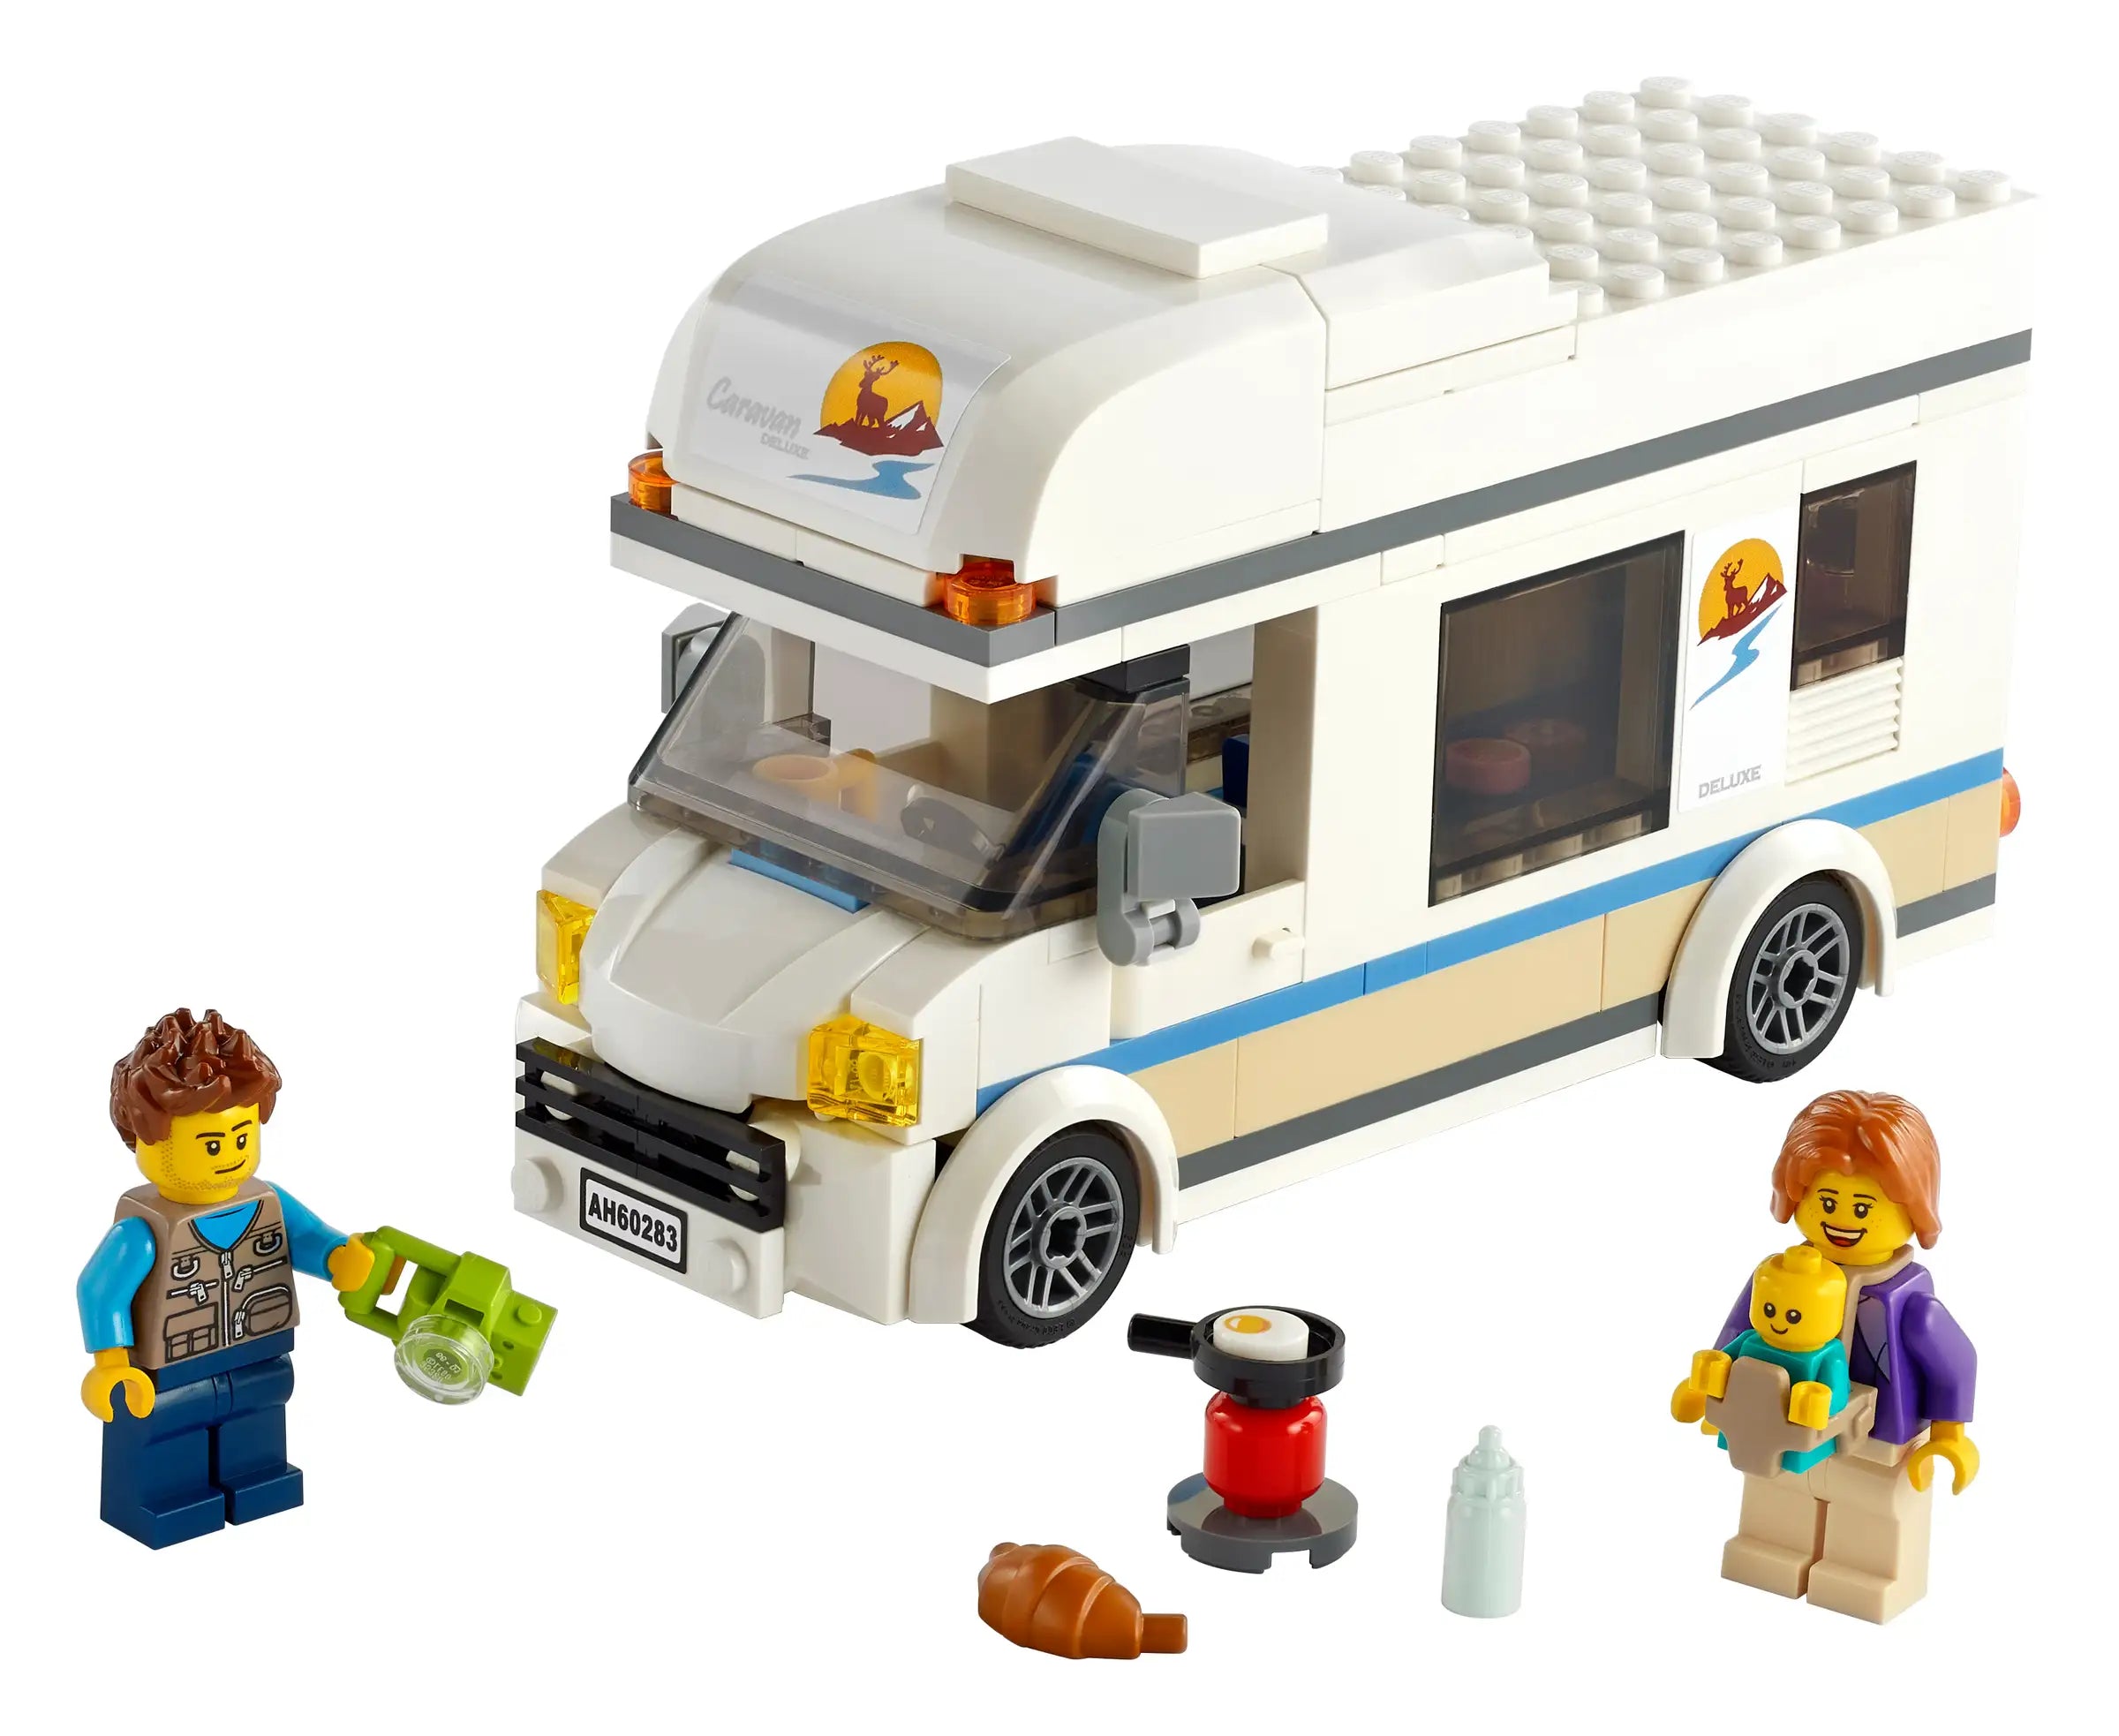 Lego - The Holiday Motorhome